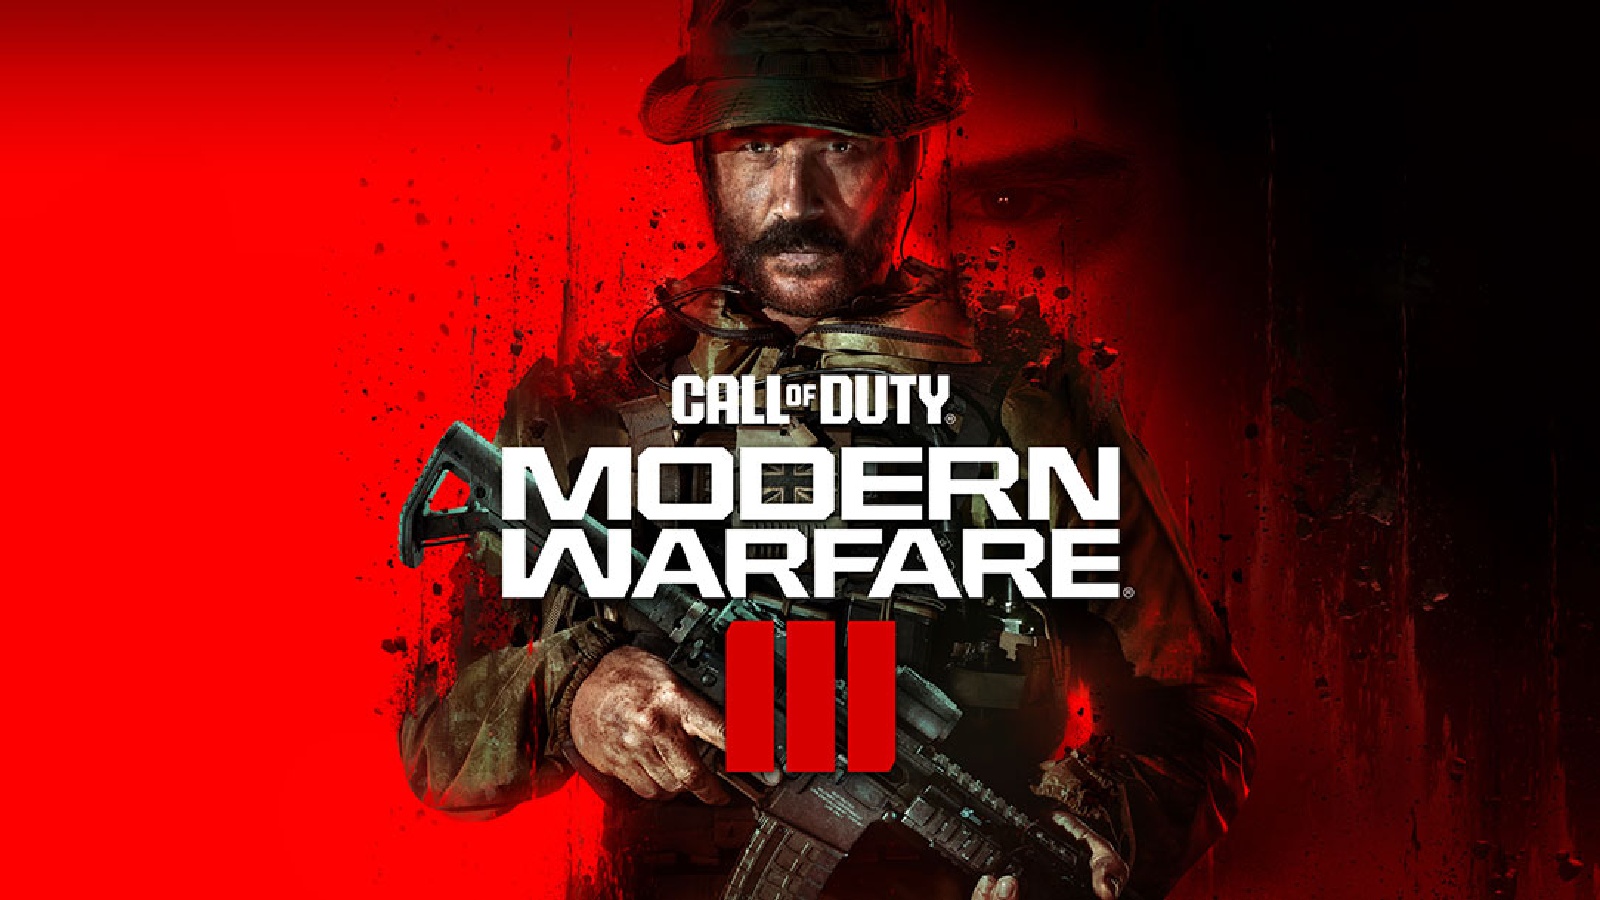 Portada de Call of Duty Modern Warfare 3